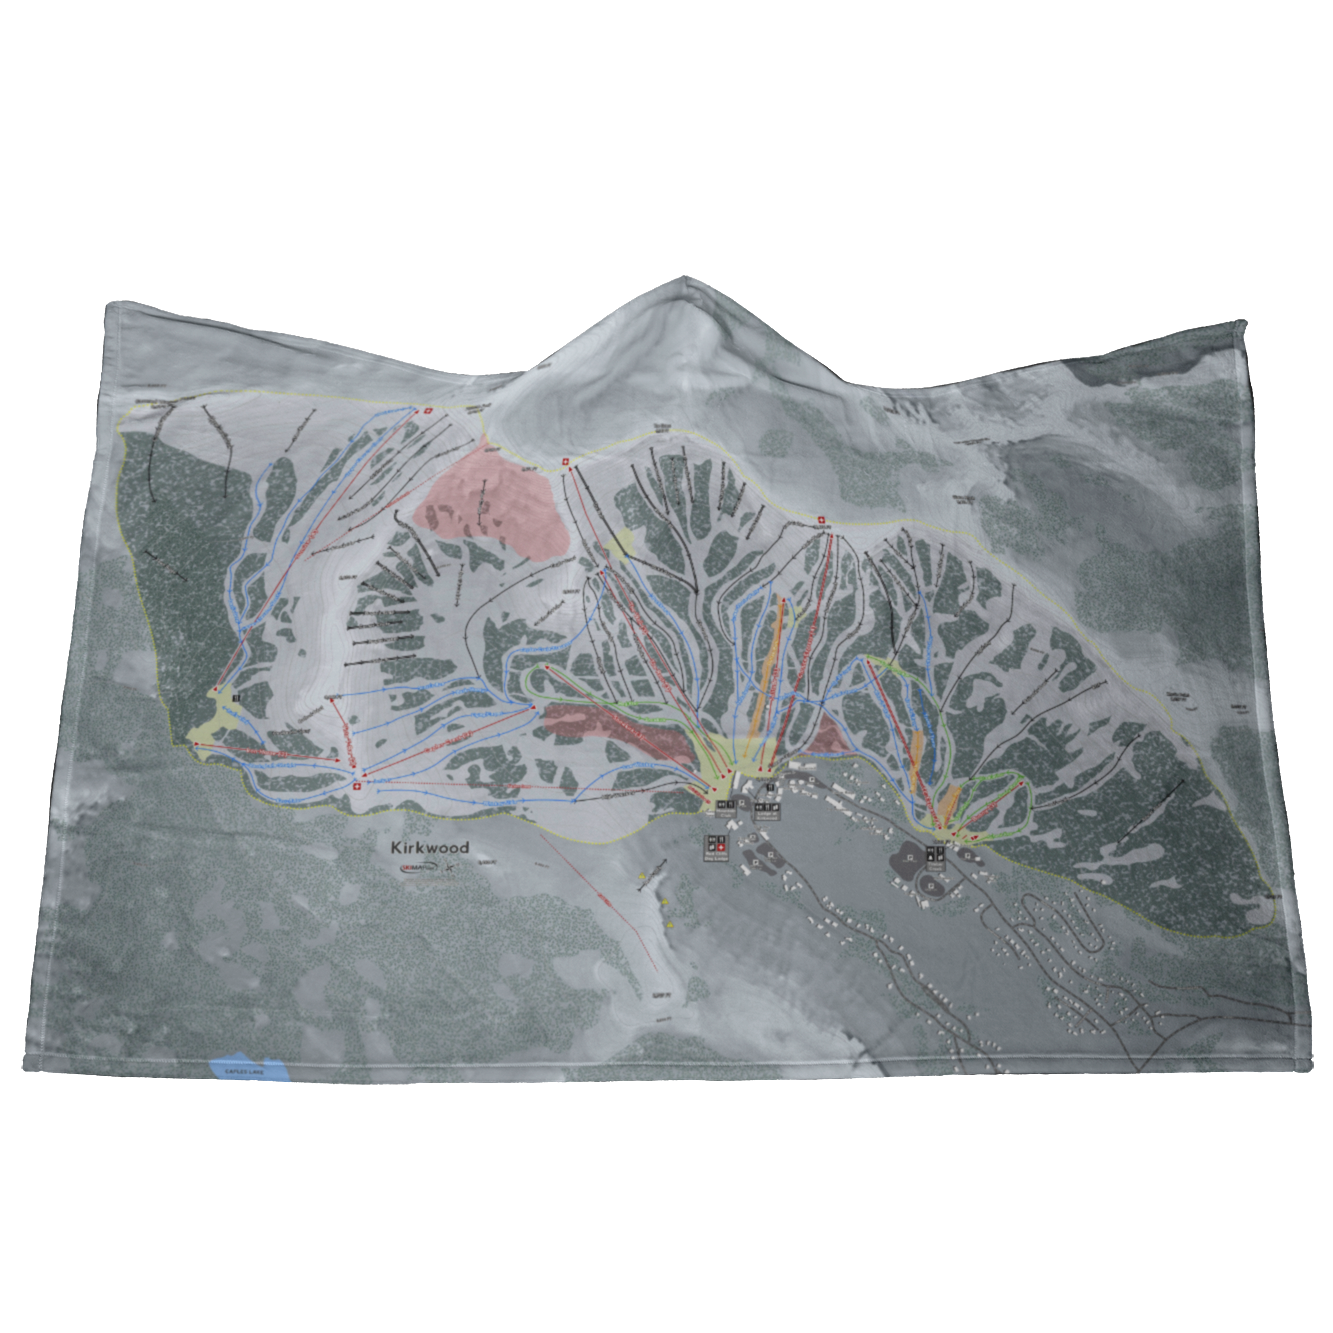 Kirkwood, California Ski Trail Map - Hooded Blanket - Powderaddicts